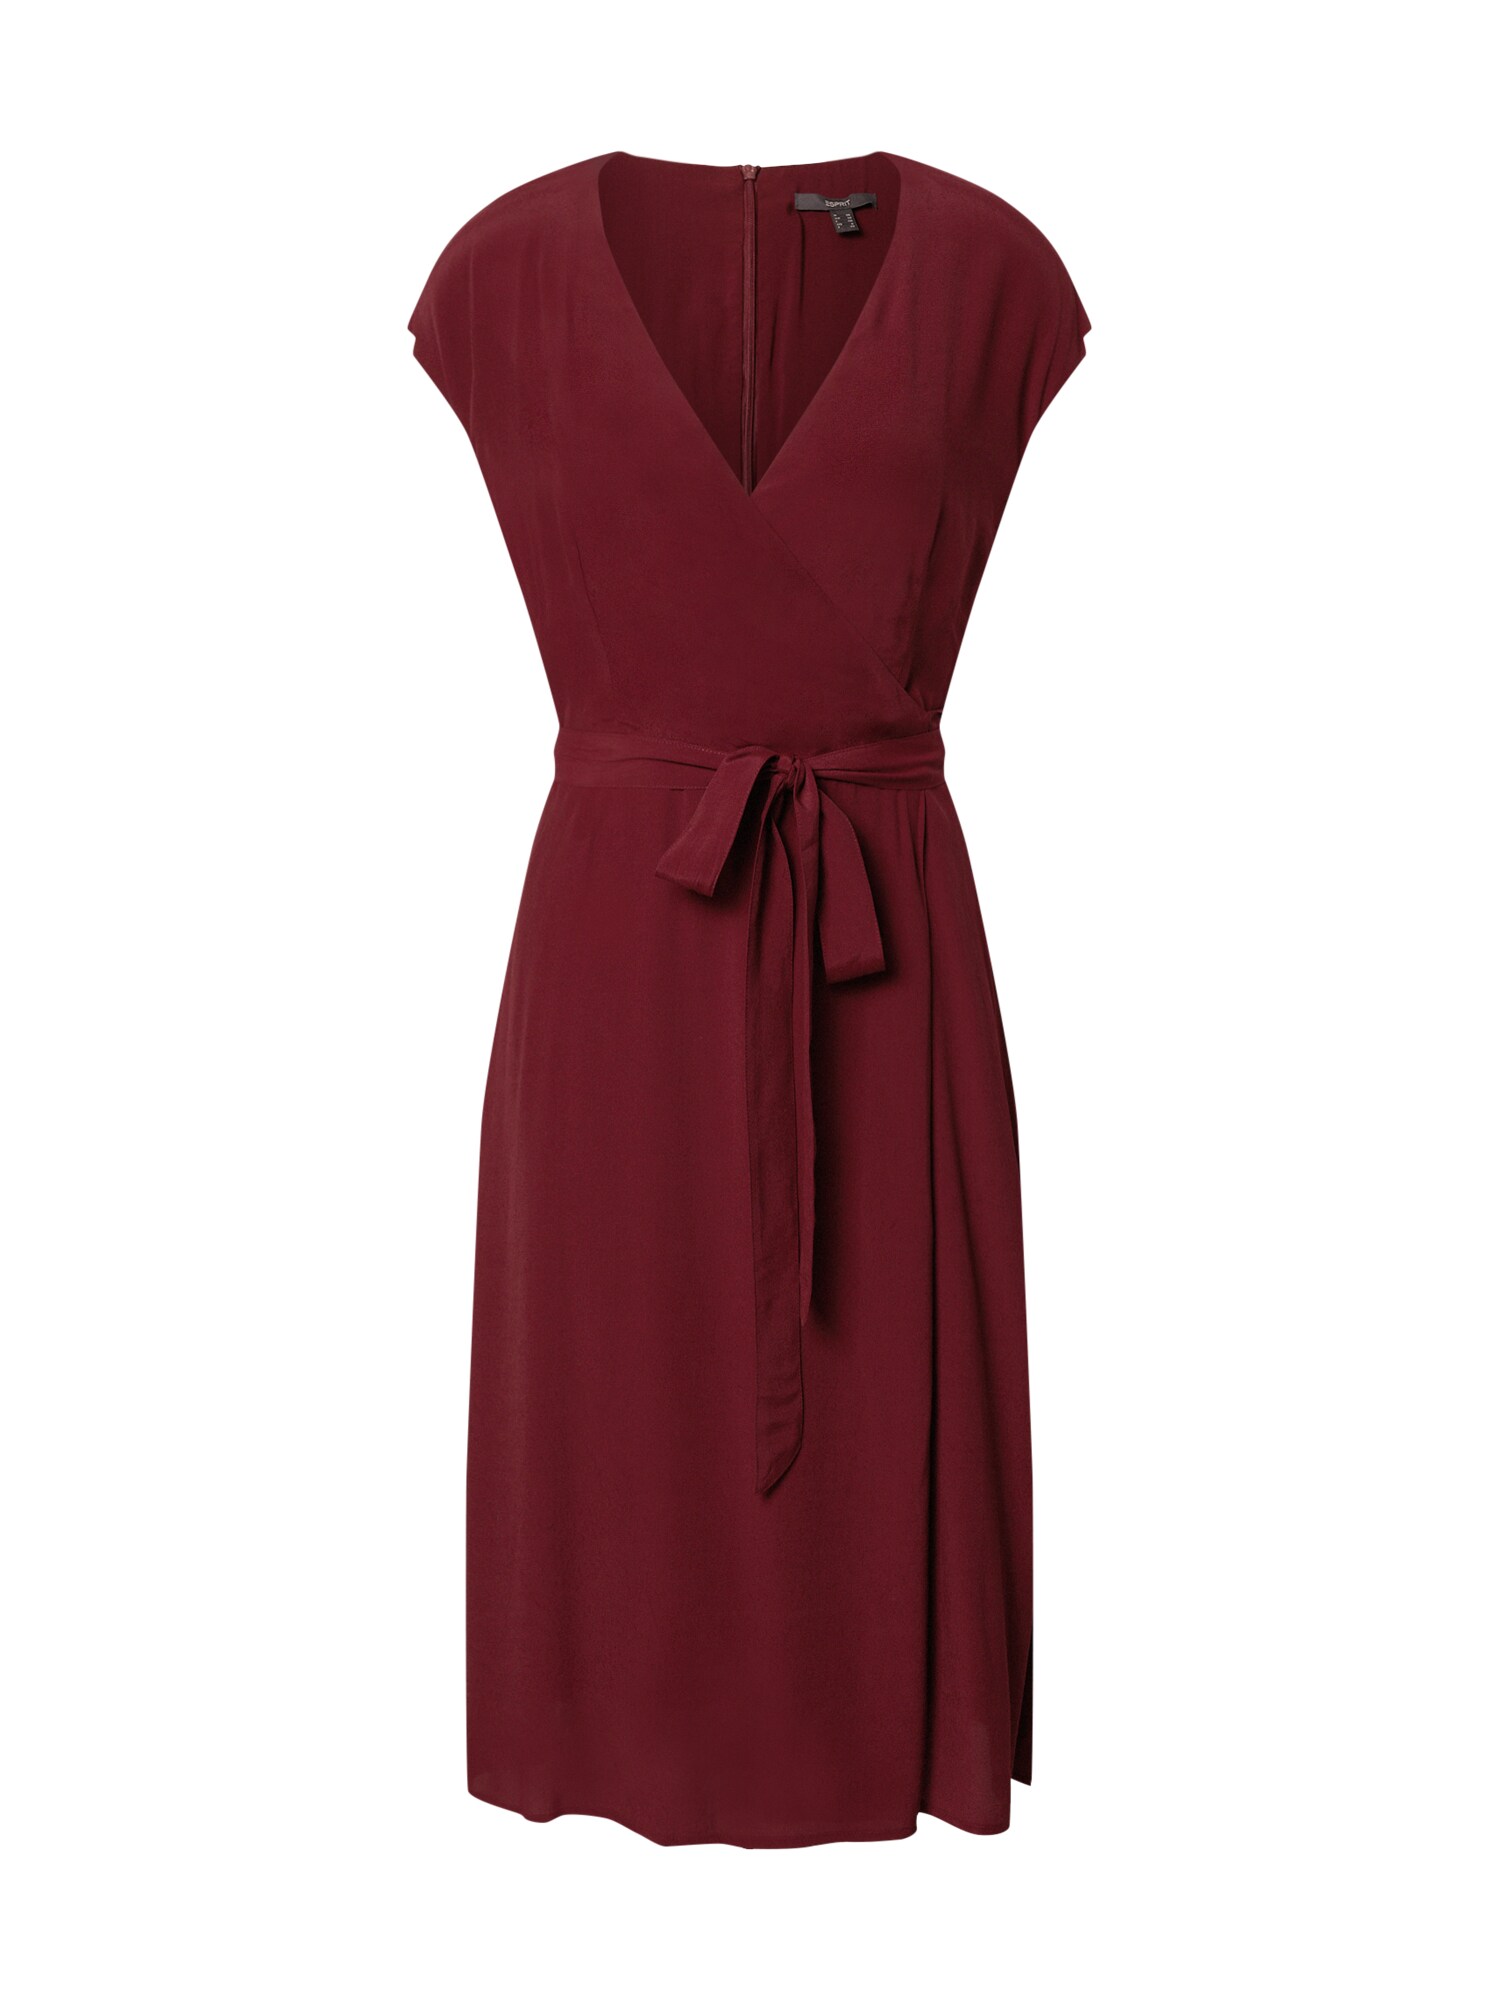 Esprit Collection Suknelė  vyšninė spalva